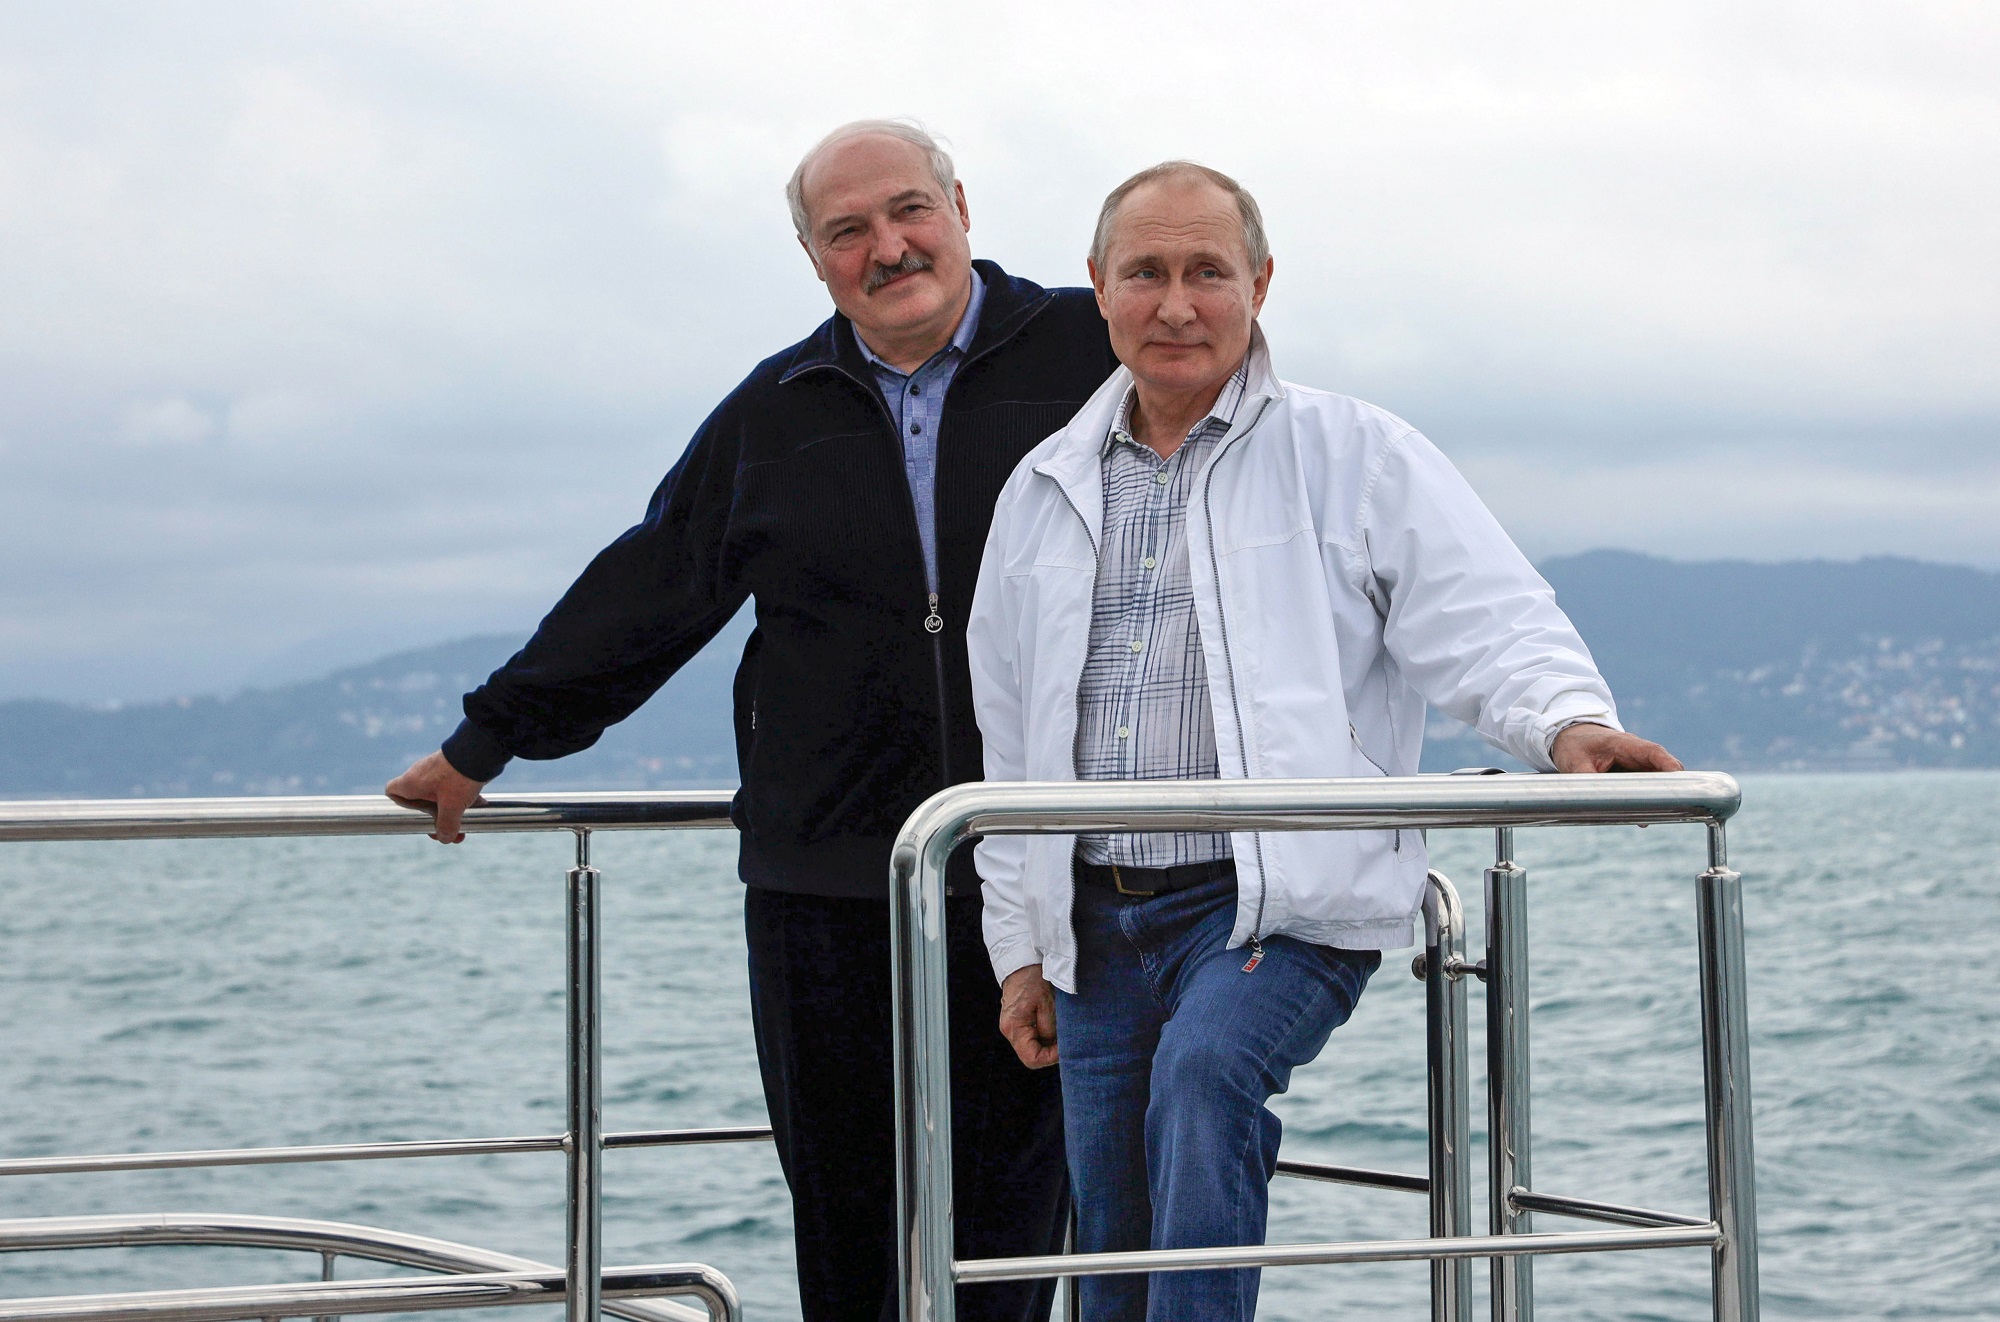 S.Z: Έγγραφο αποκαλύπτει την επιθυμία Πούτιν να προσαρτήσει τη Λευκορωσία έως το 2030